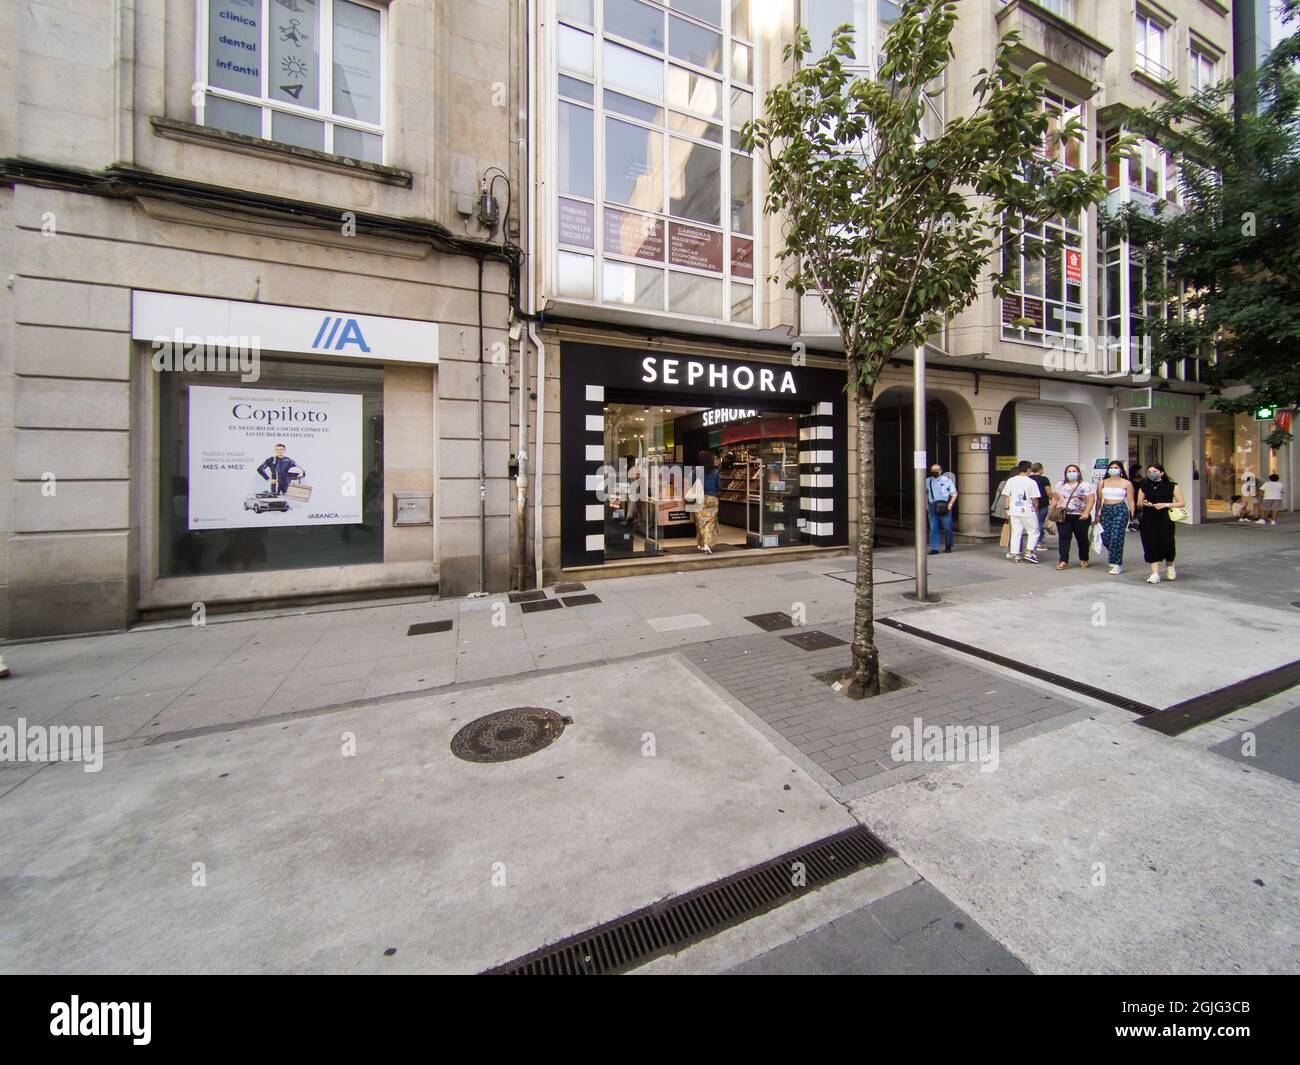 VIGO, ESPAÑA - de agosto de 2021: Fachada de la tienda SEPHORA en Vigo, España Fotografía stock -